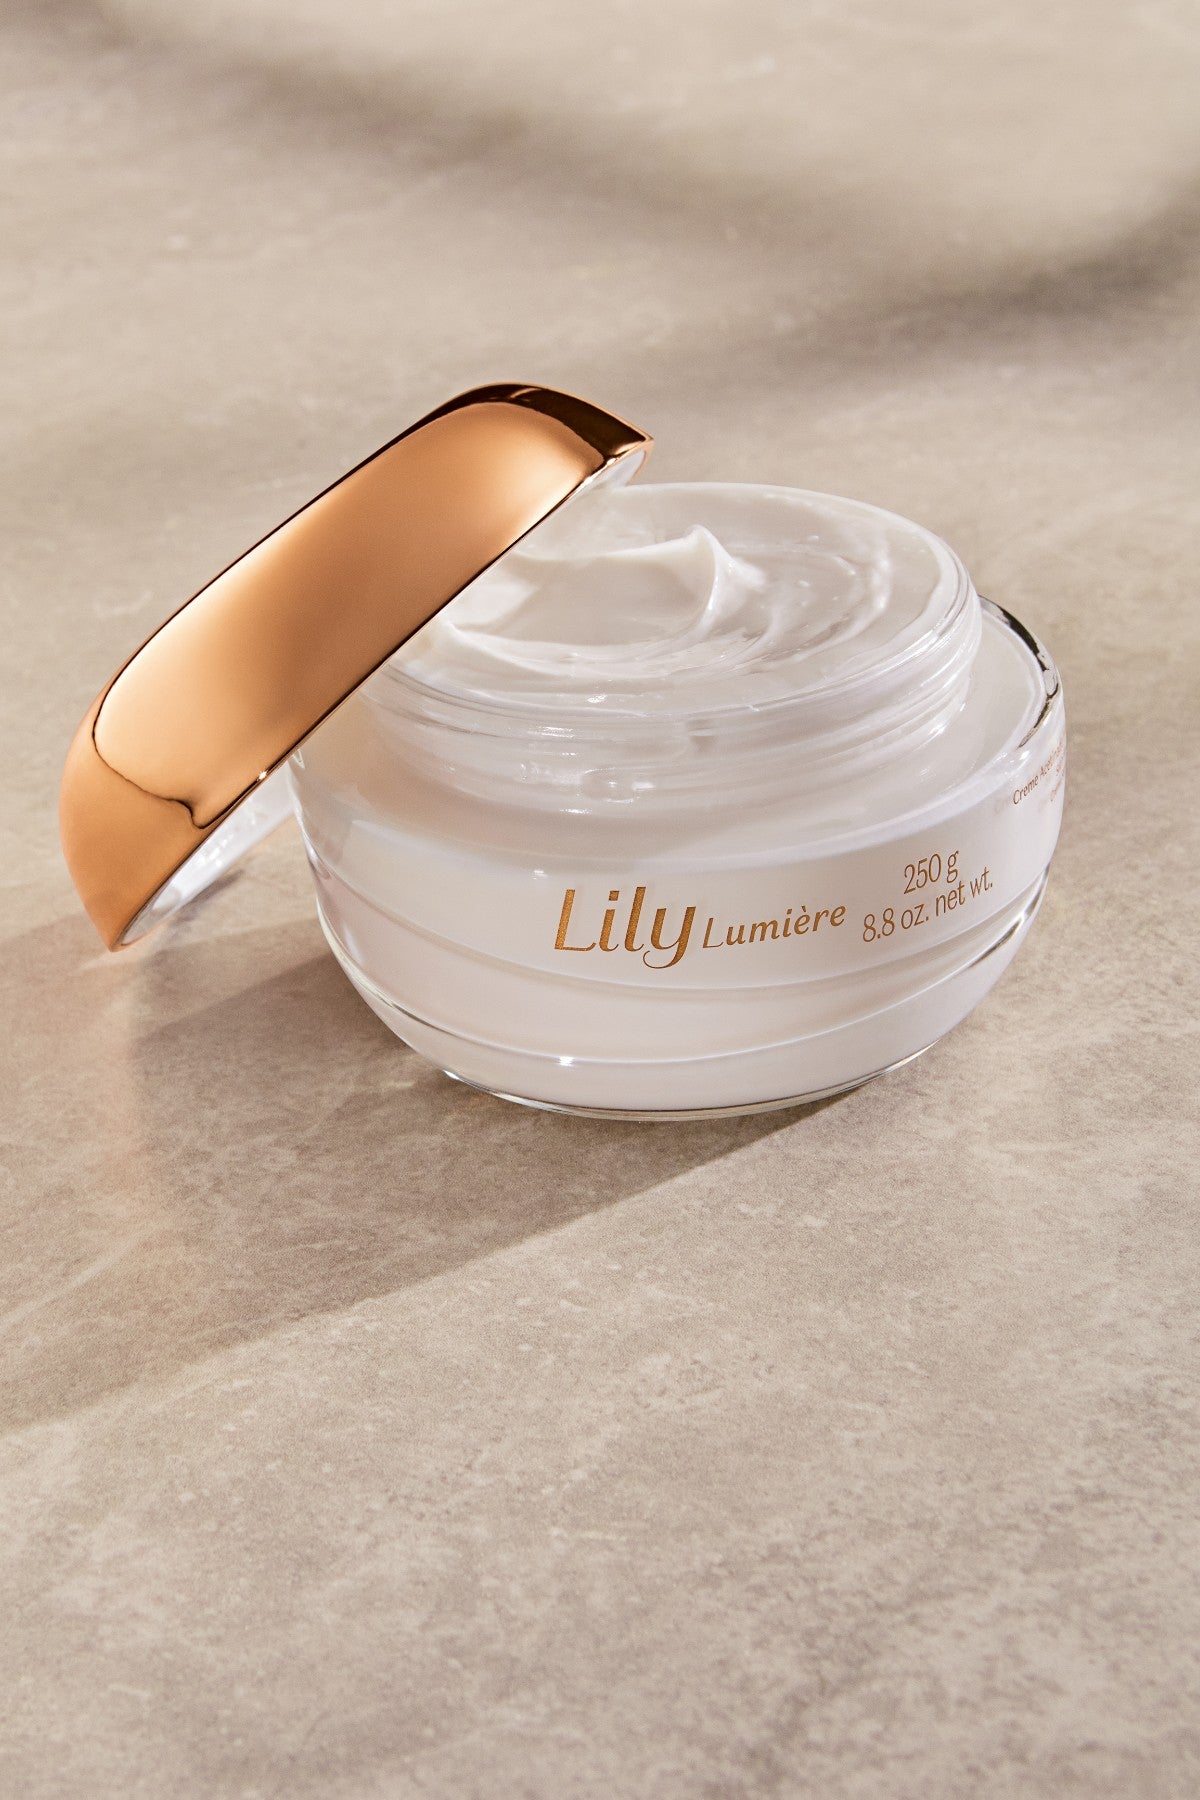 Lily Lumière Satin Body Cream